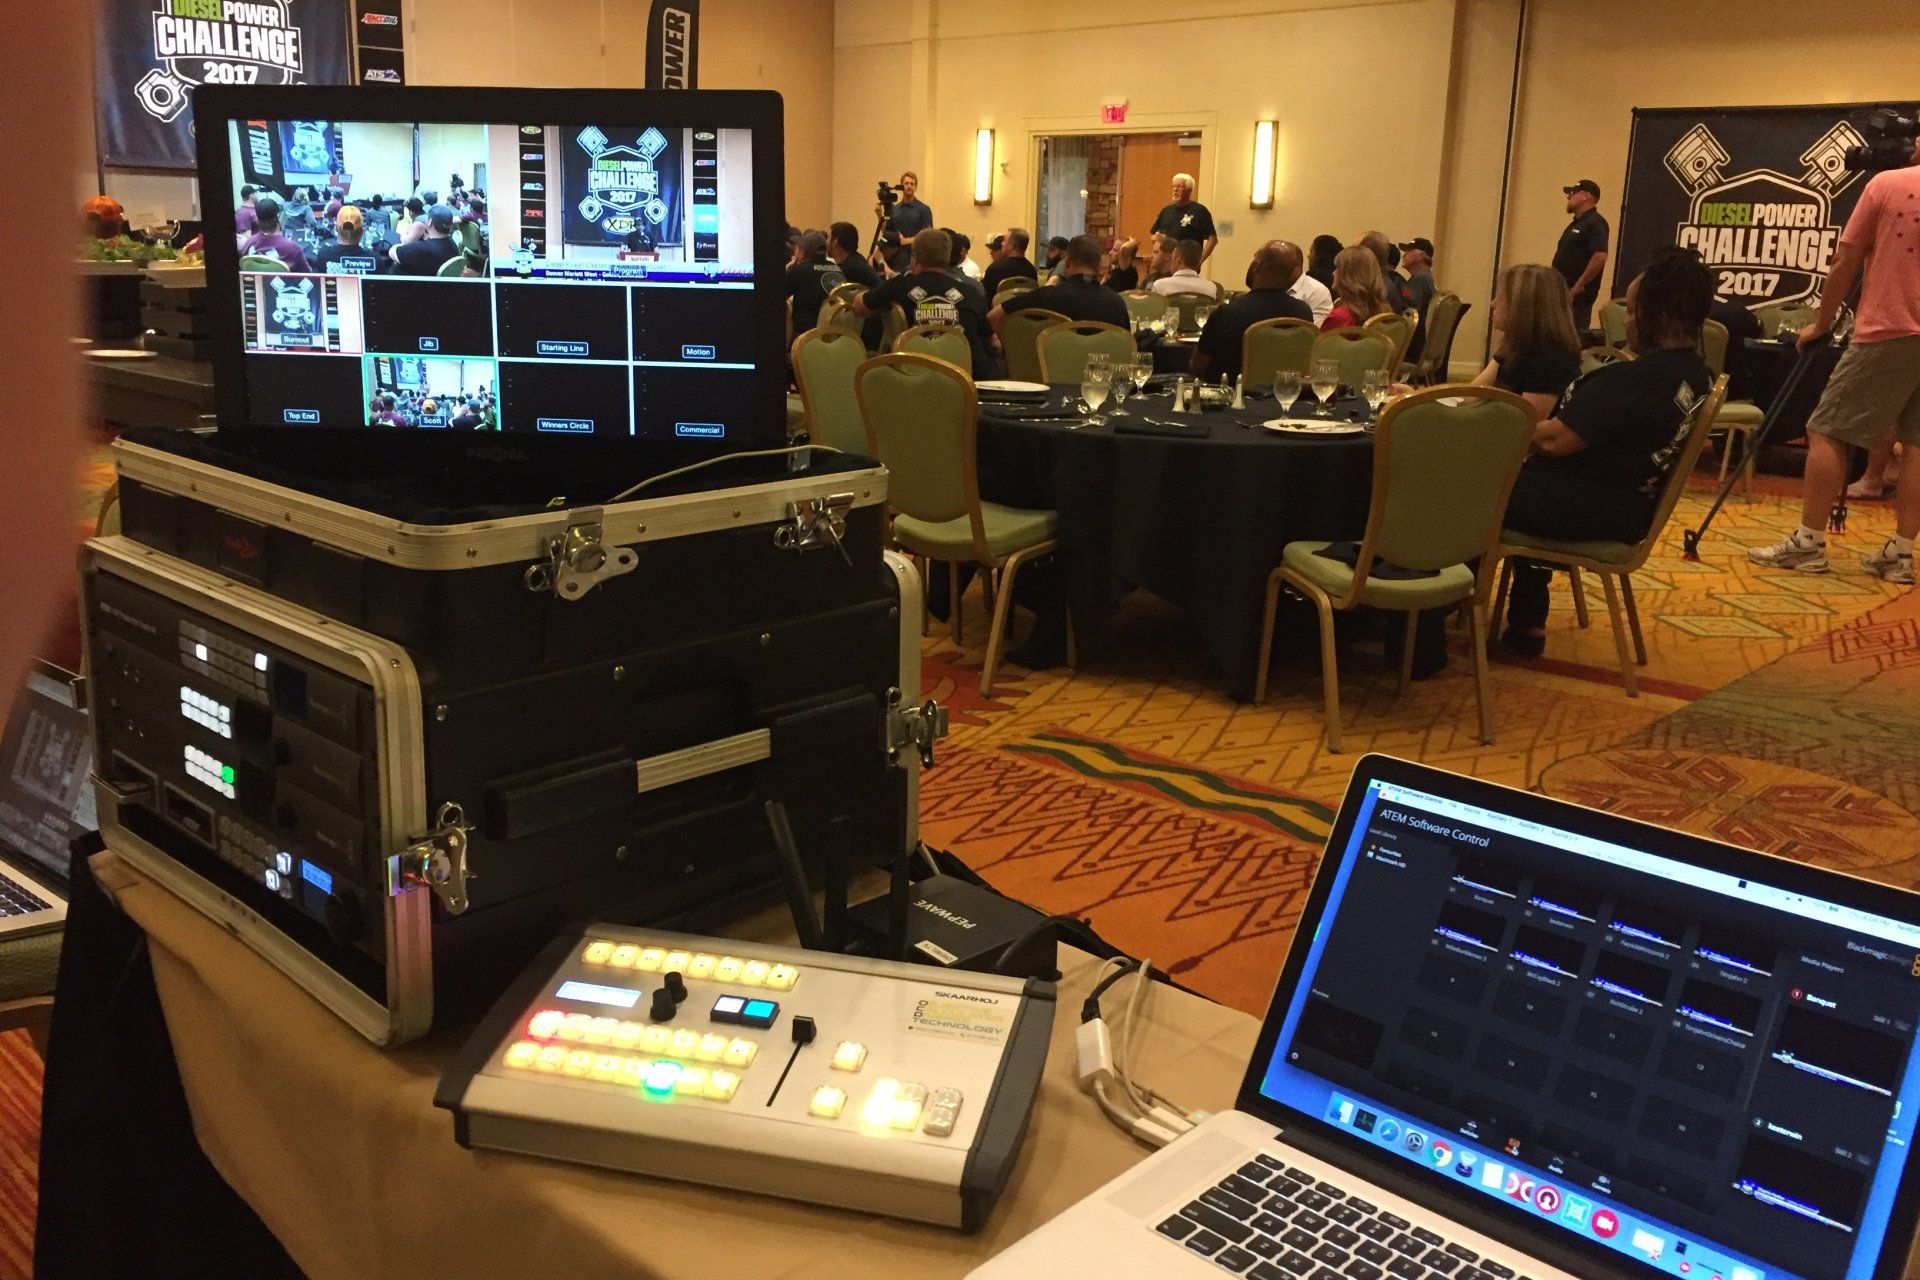 video recording equipment at event